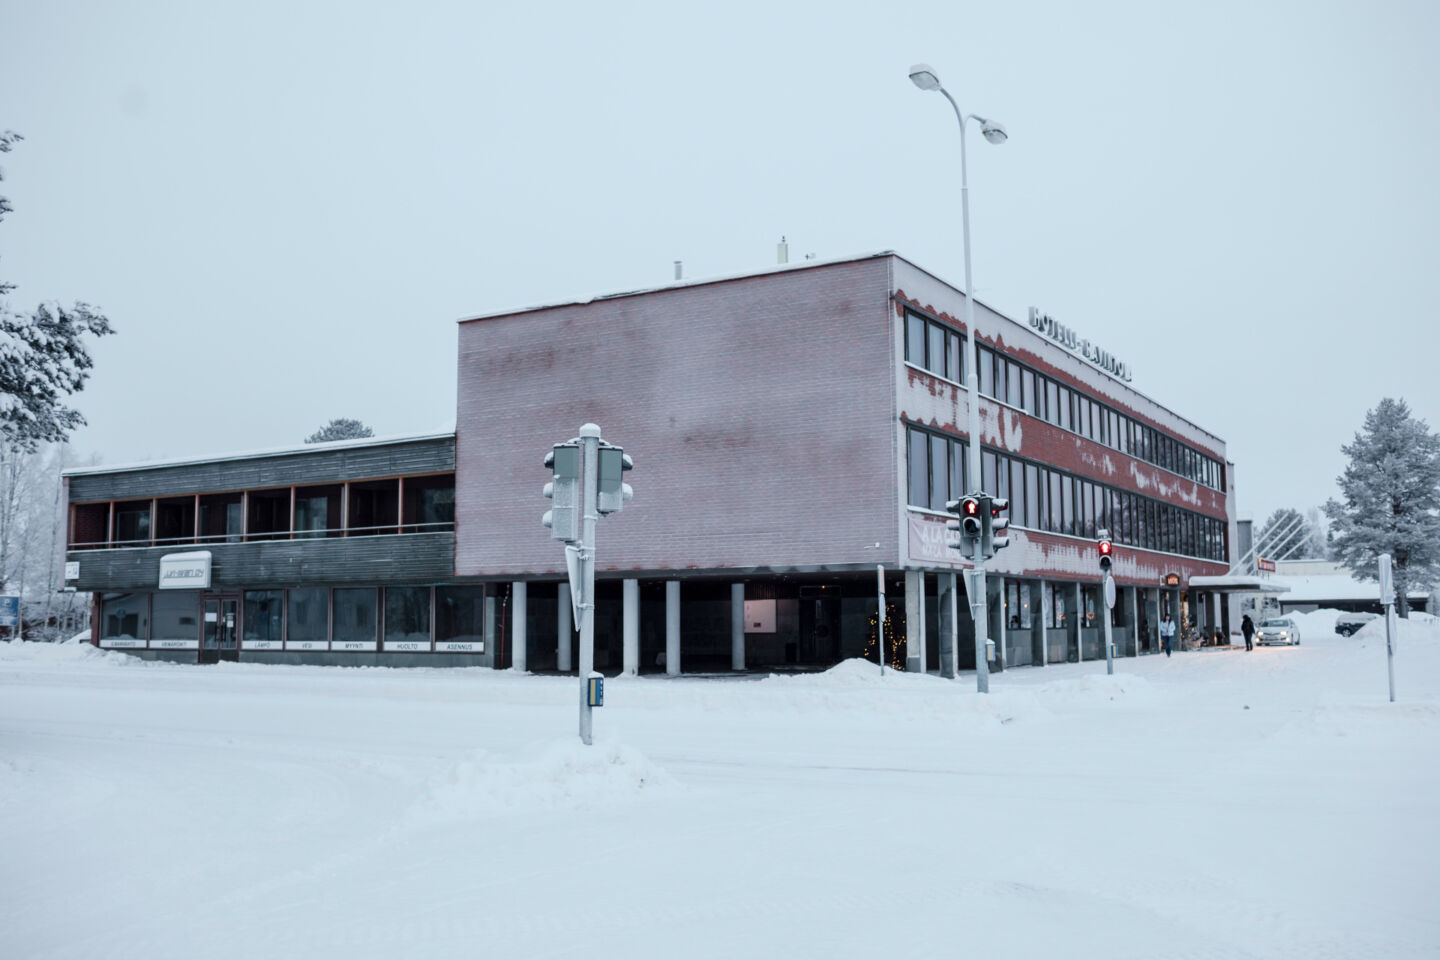 A retro building in downtown Sodankylä, Finland in winter, a stand-in location for Siberia